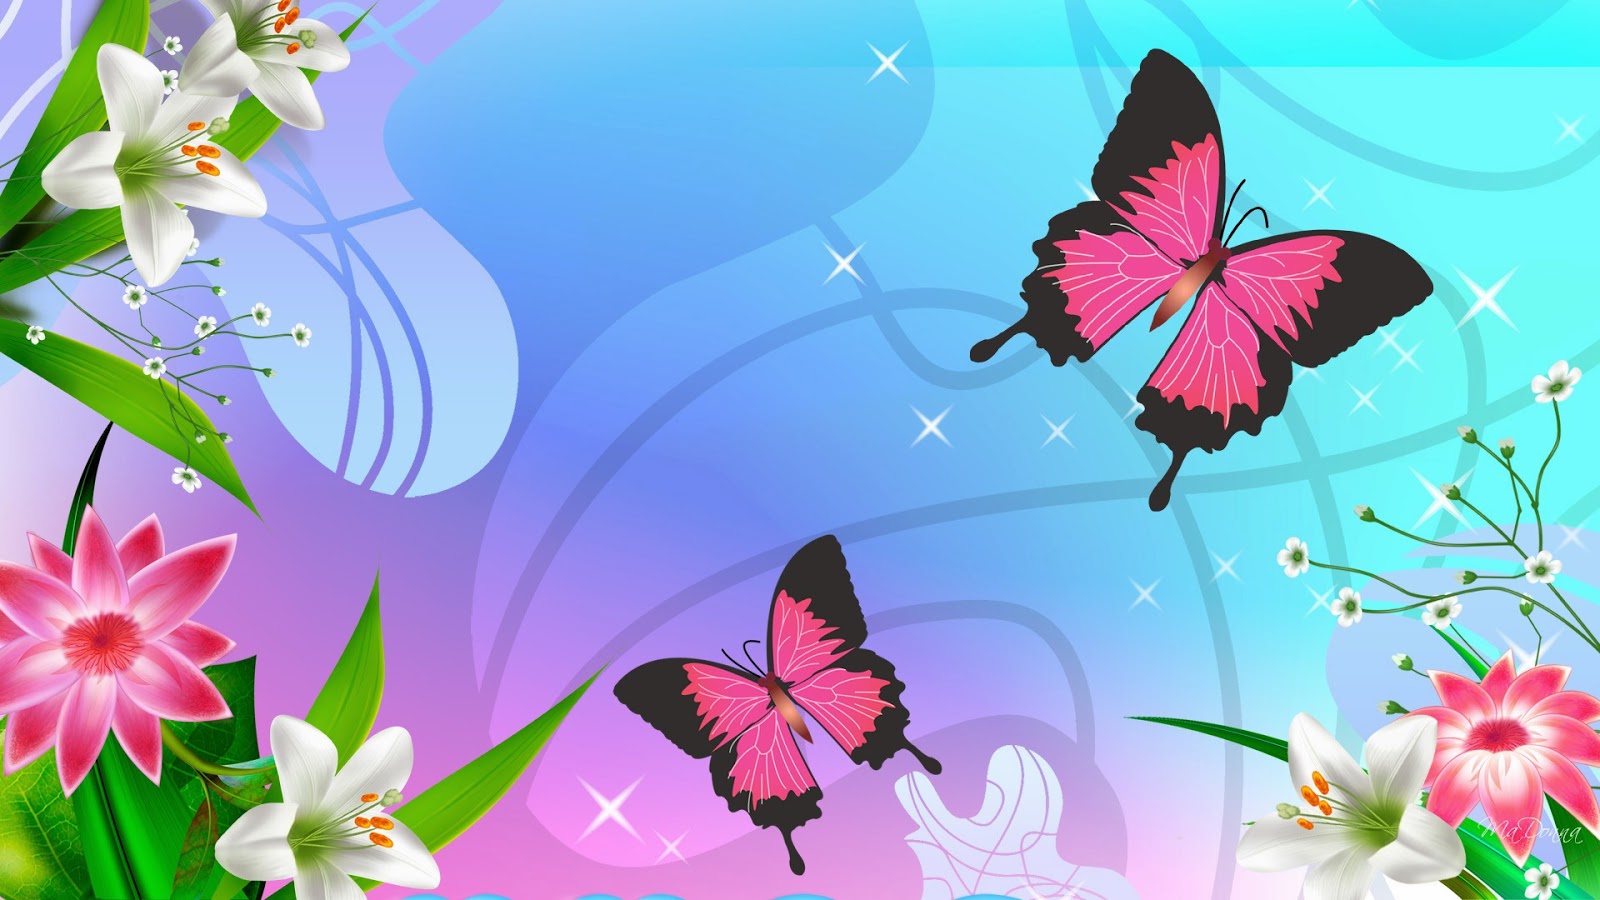  butterfly and flower wallpaper   beautiful desktop wallpapers 2014